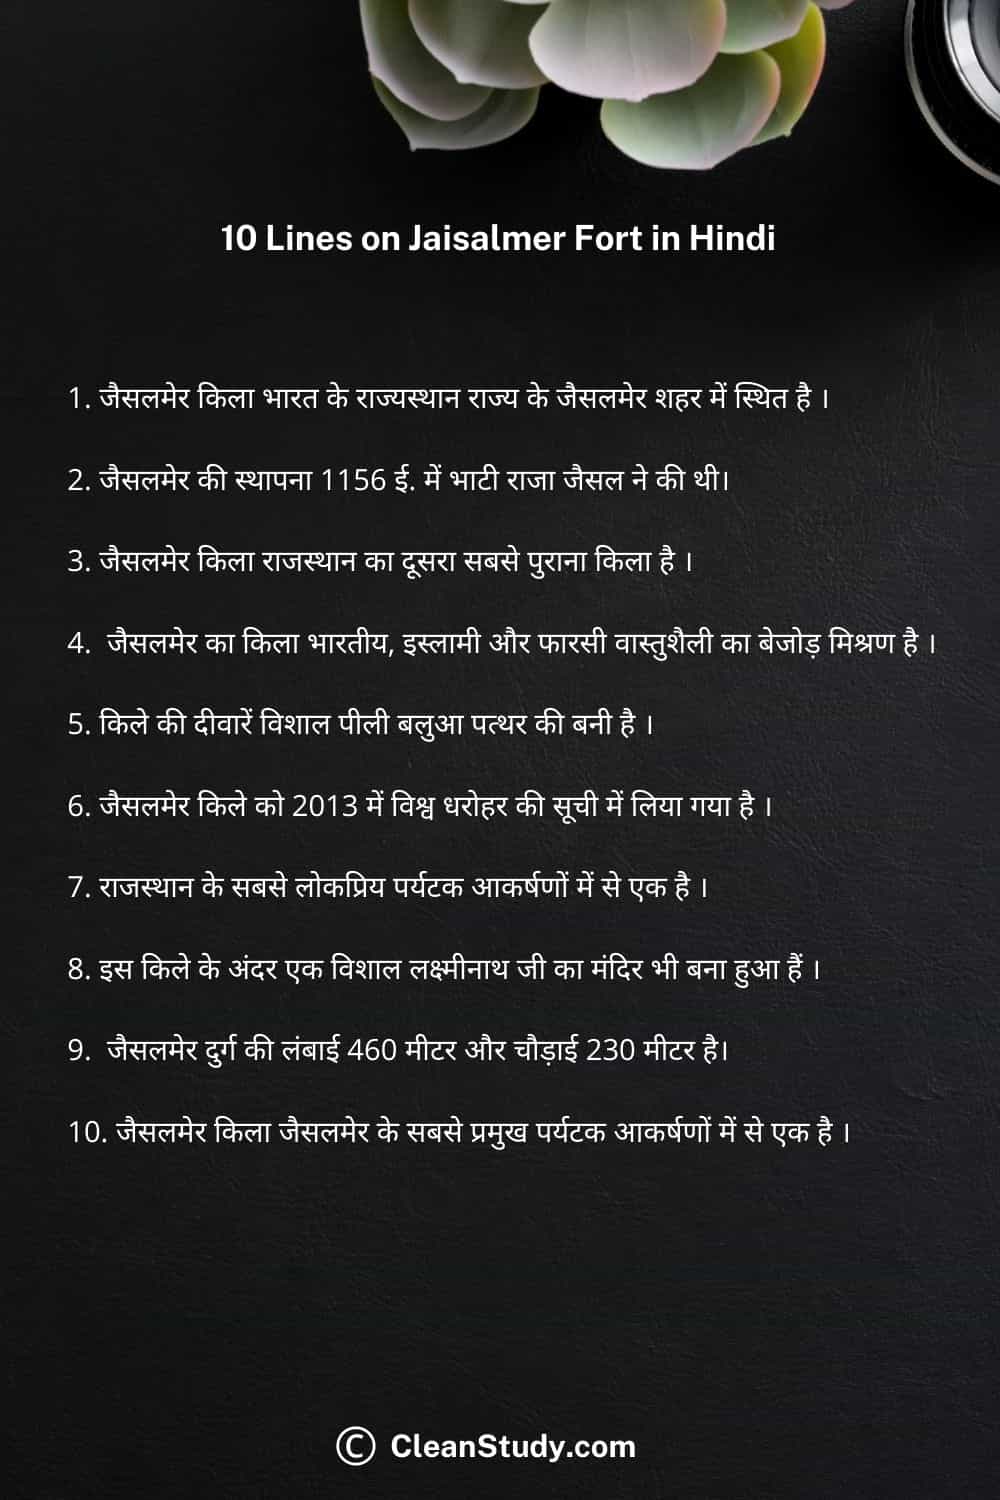 10 lines on jaisalmer fort in hindi